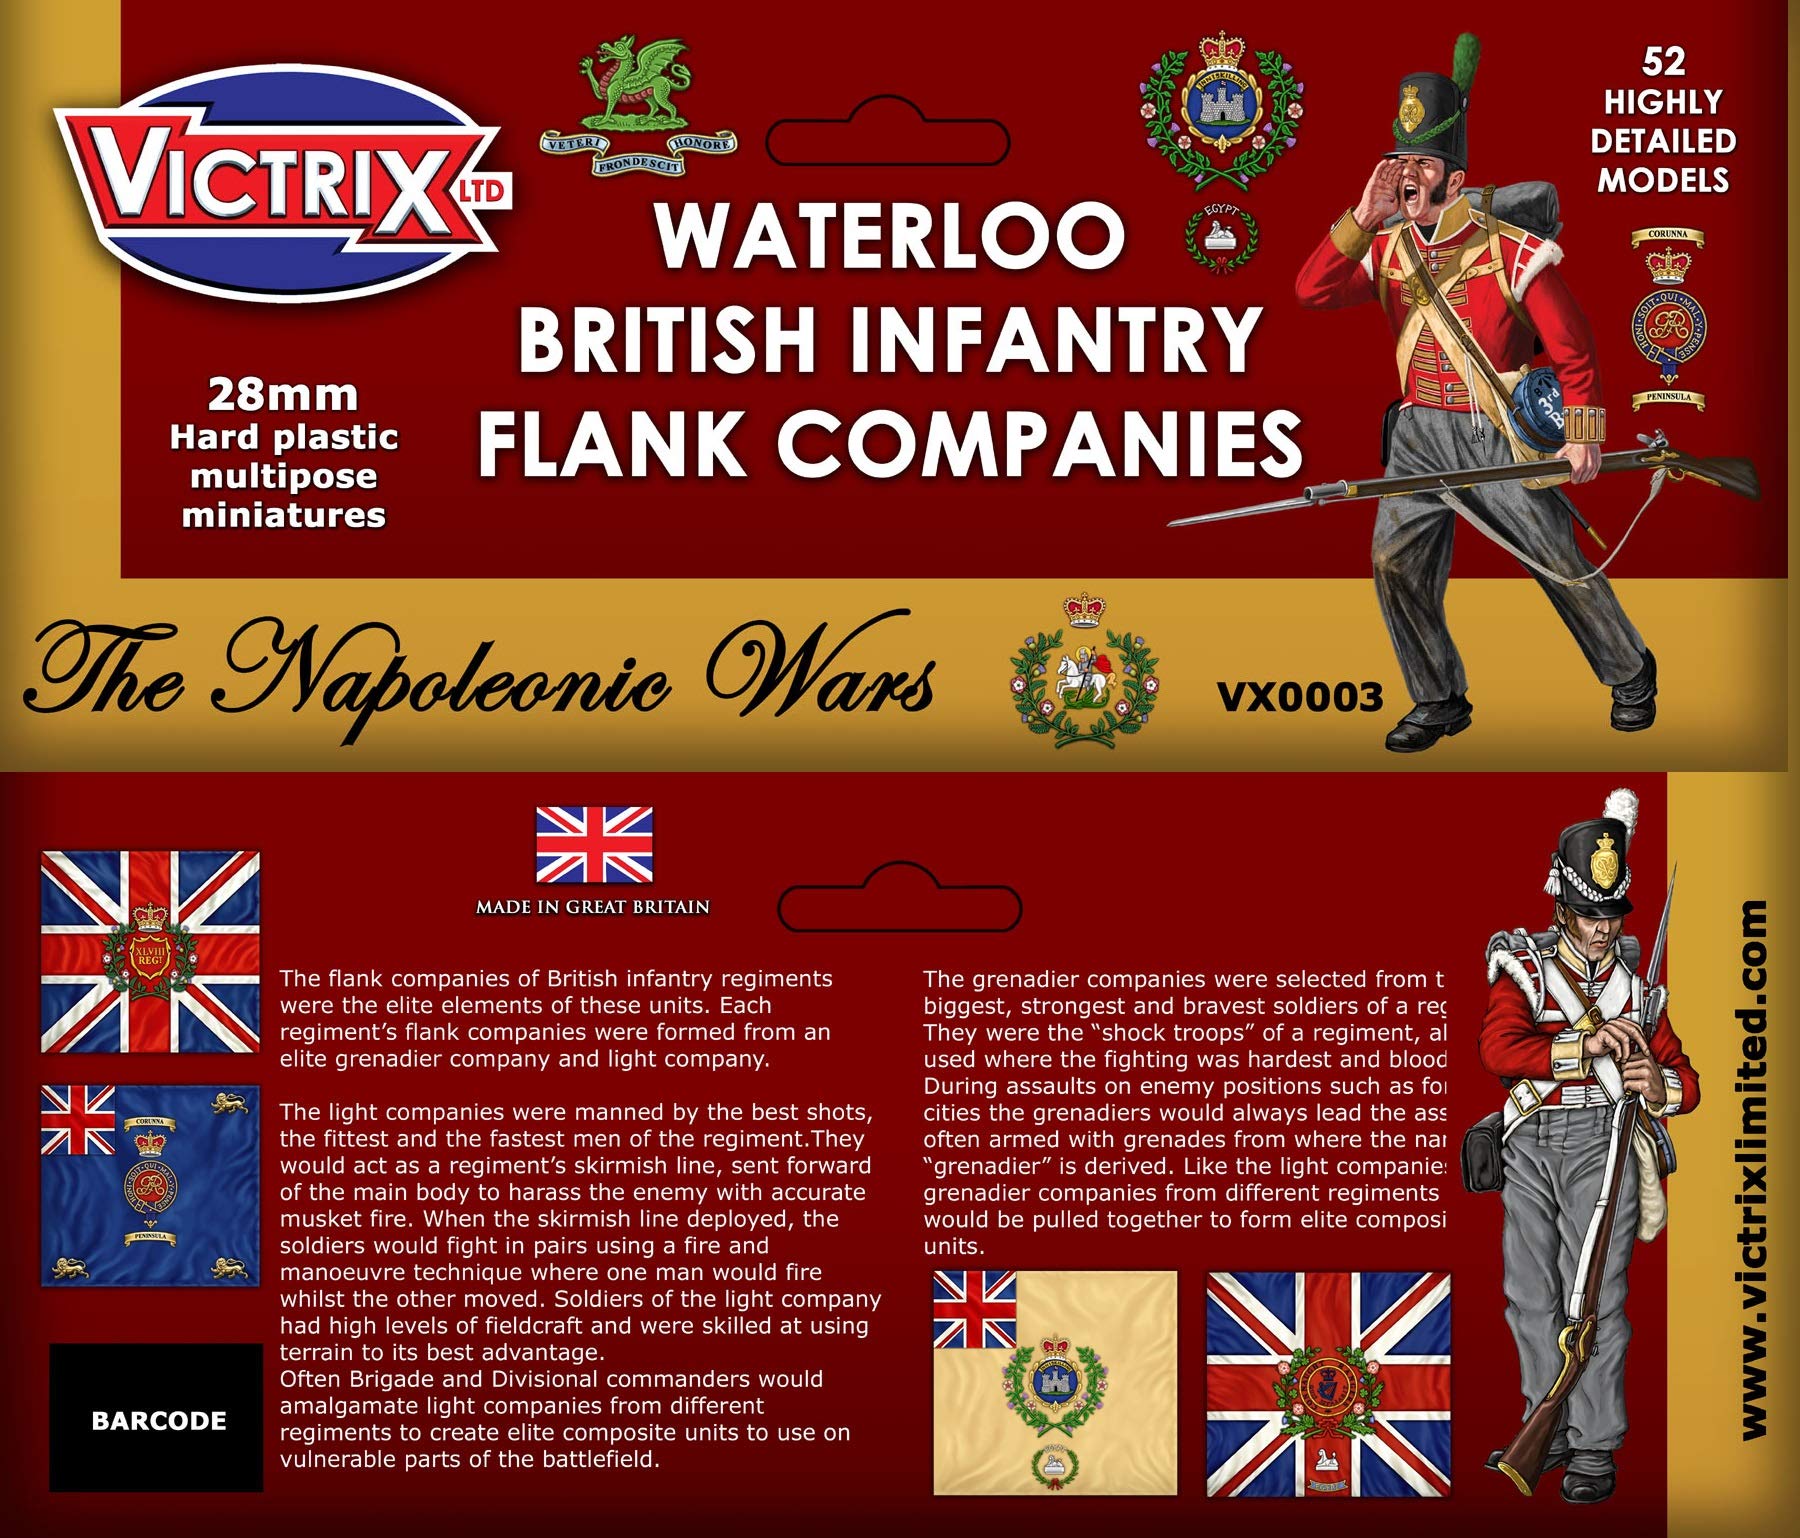 Victrix VX0003 - Waterloo Britische Infanterie Flank Companies - 52 Abbildung Box Set mit Fahnen - 28mm Plastic Miniatures Napoleonic